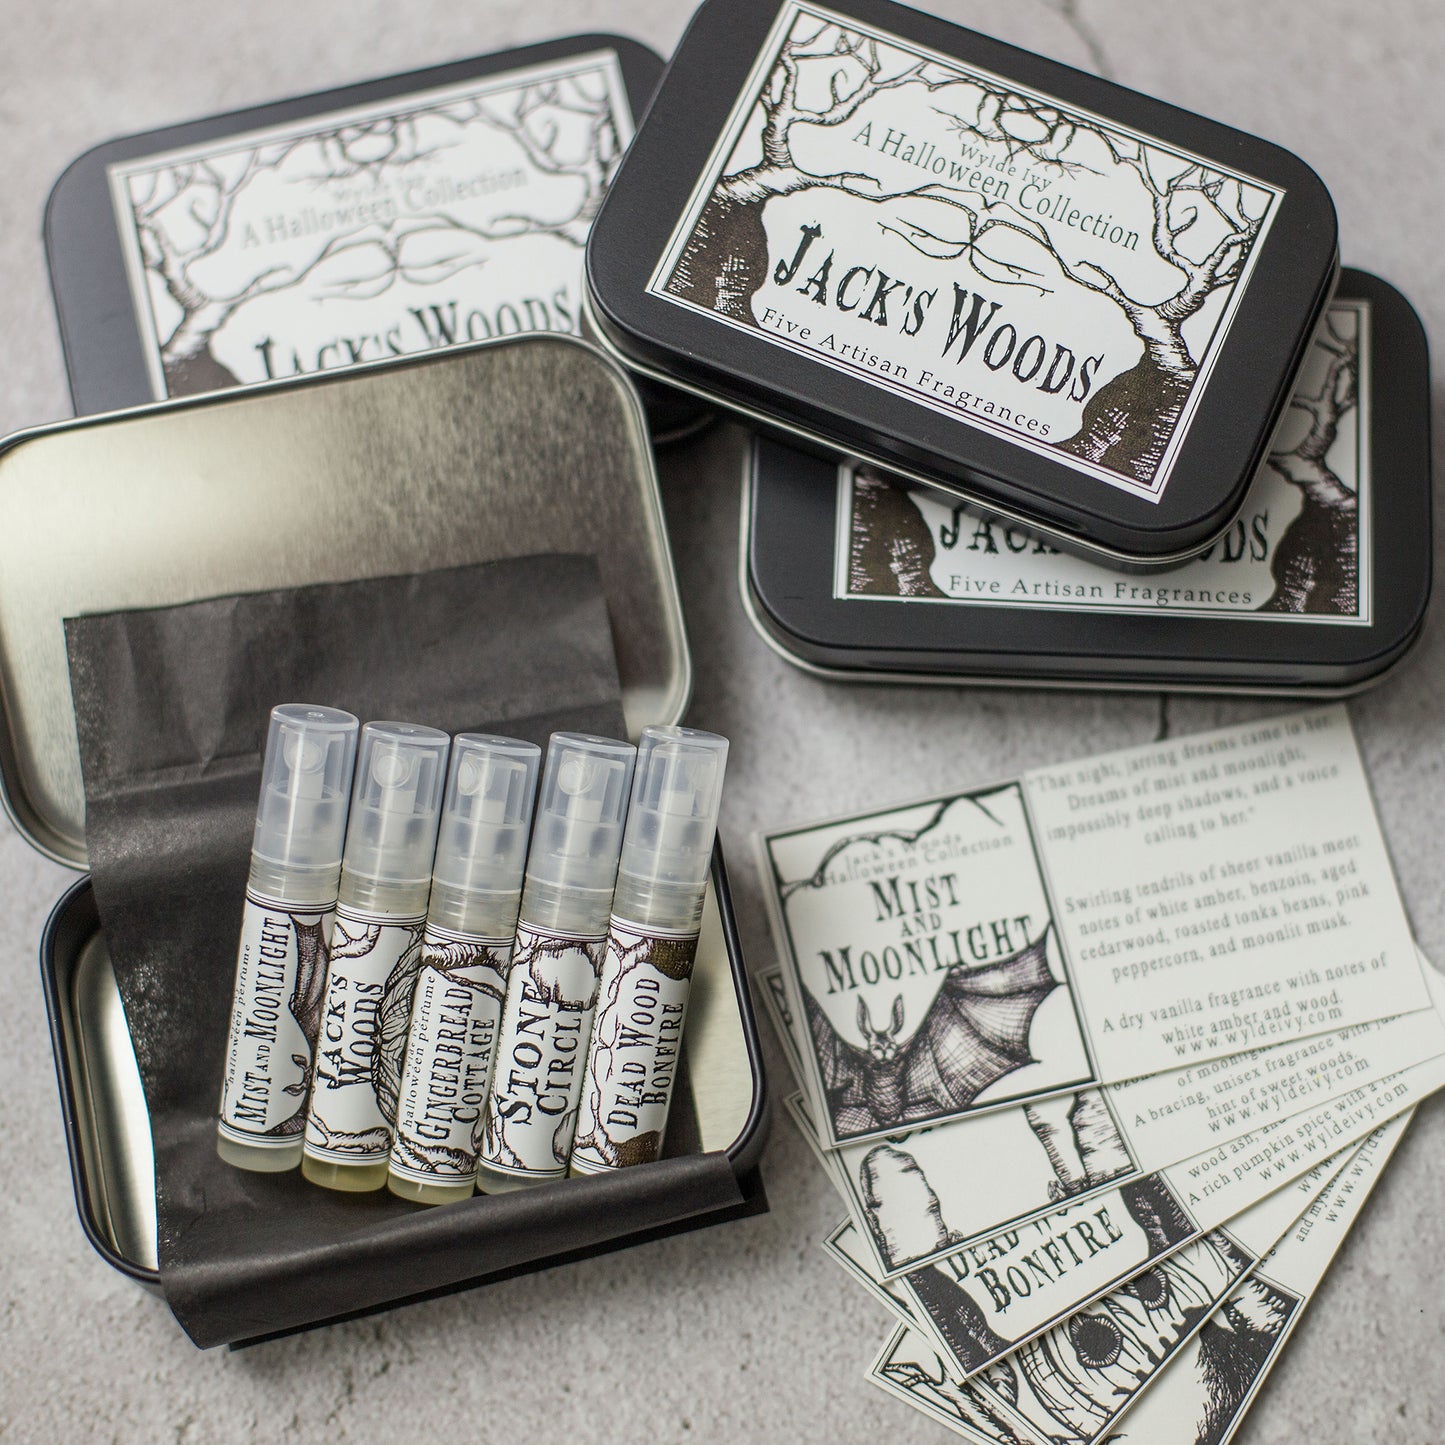 Jack's Woods Collection Perfume Sampler Gift Set